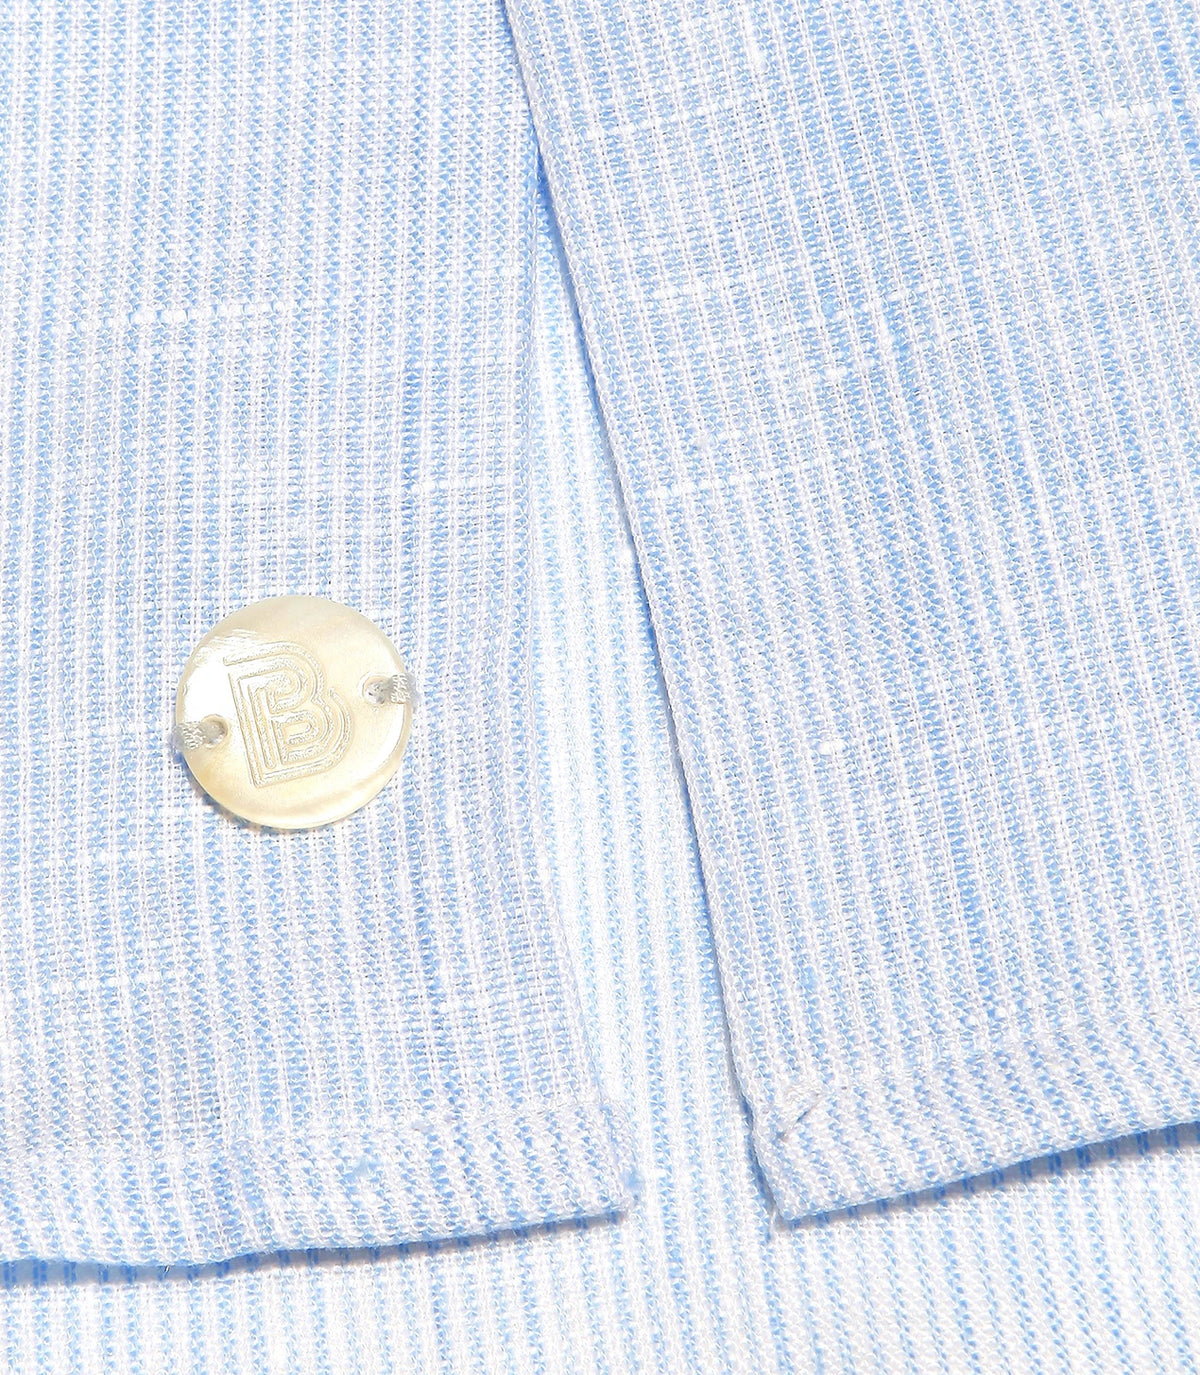 Coupe Courte Linen Shirt Striped Blue - Barthelemy